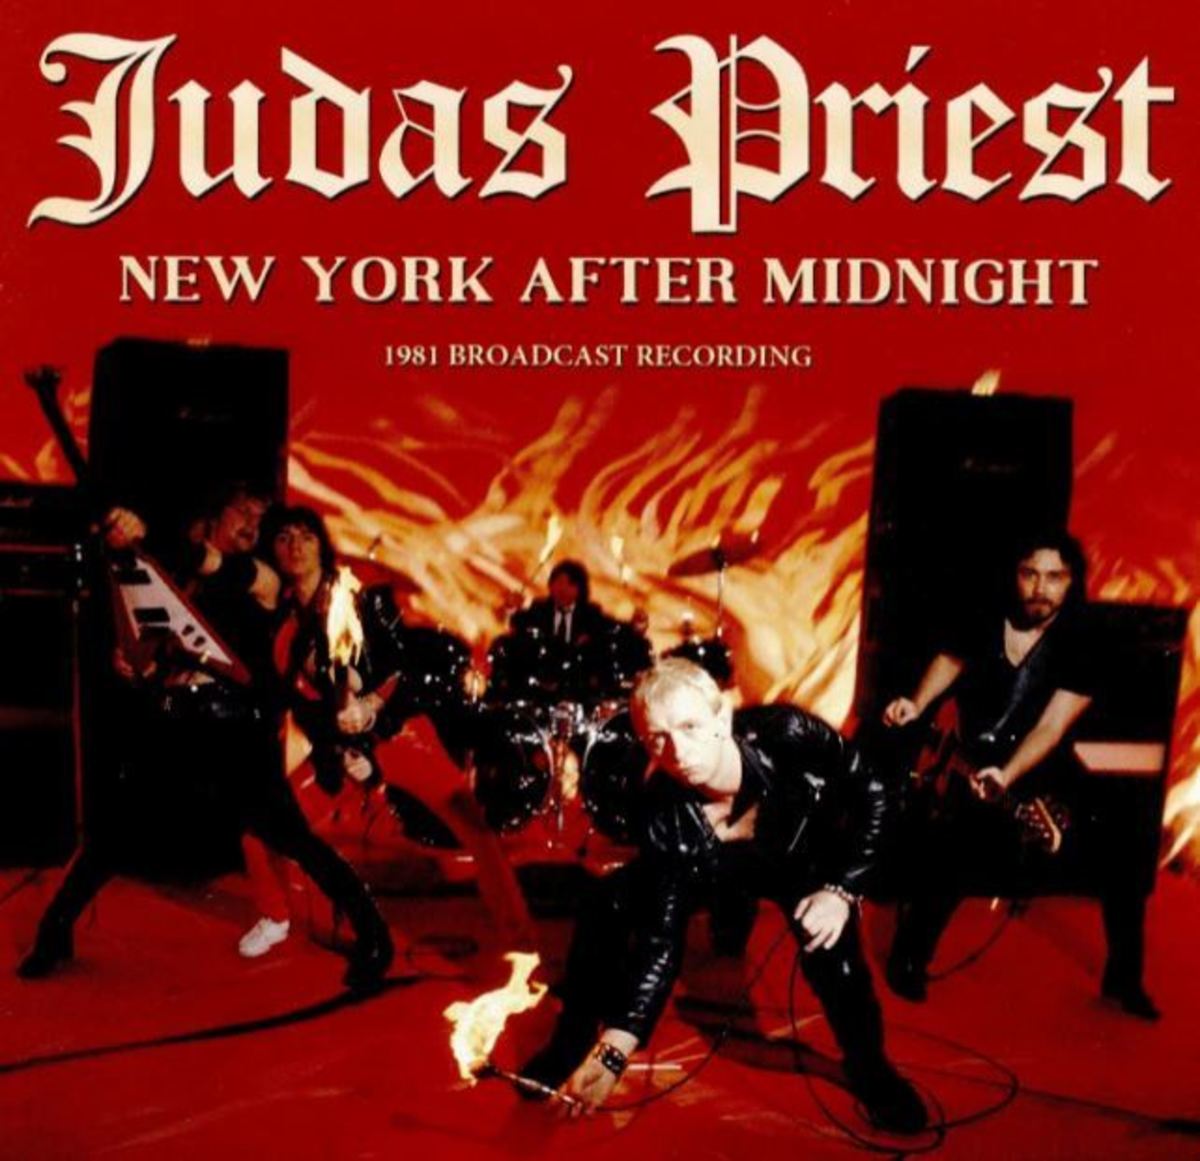 judas-priest-new-york-after-midnight-album-review